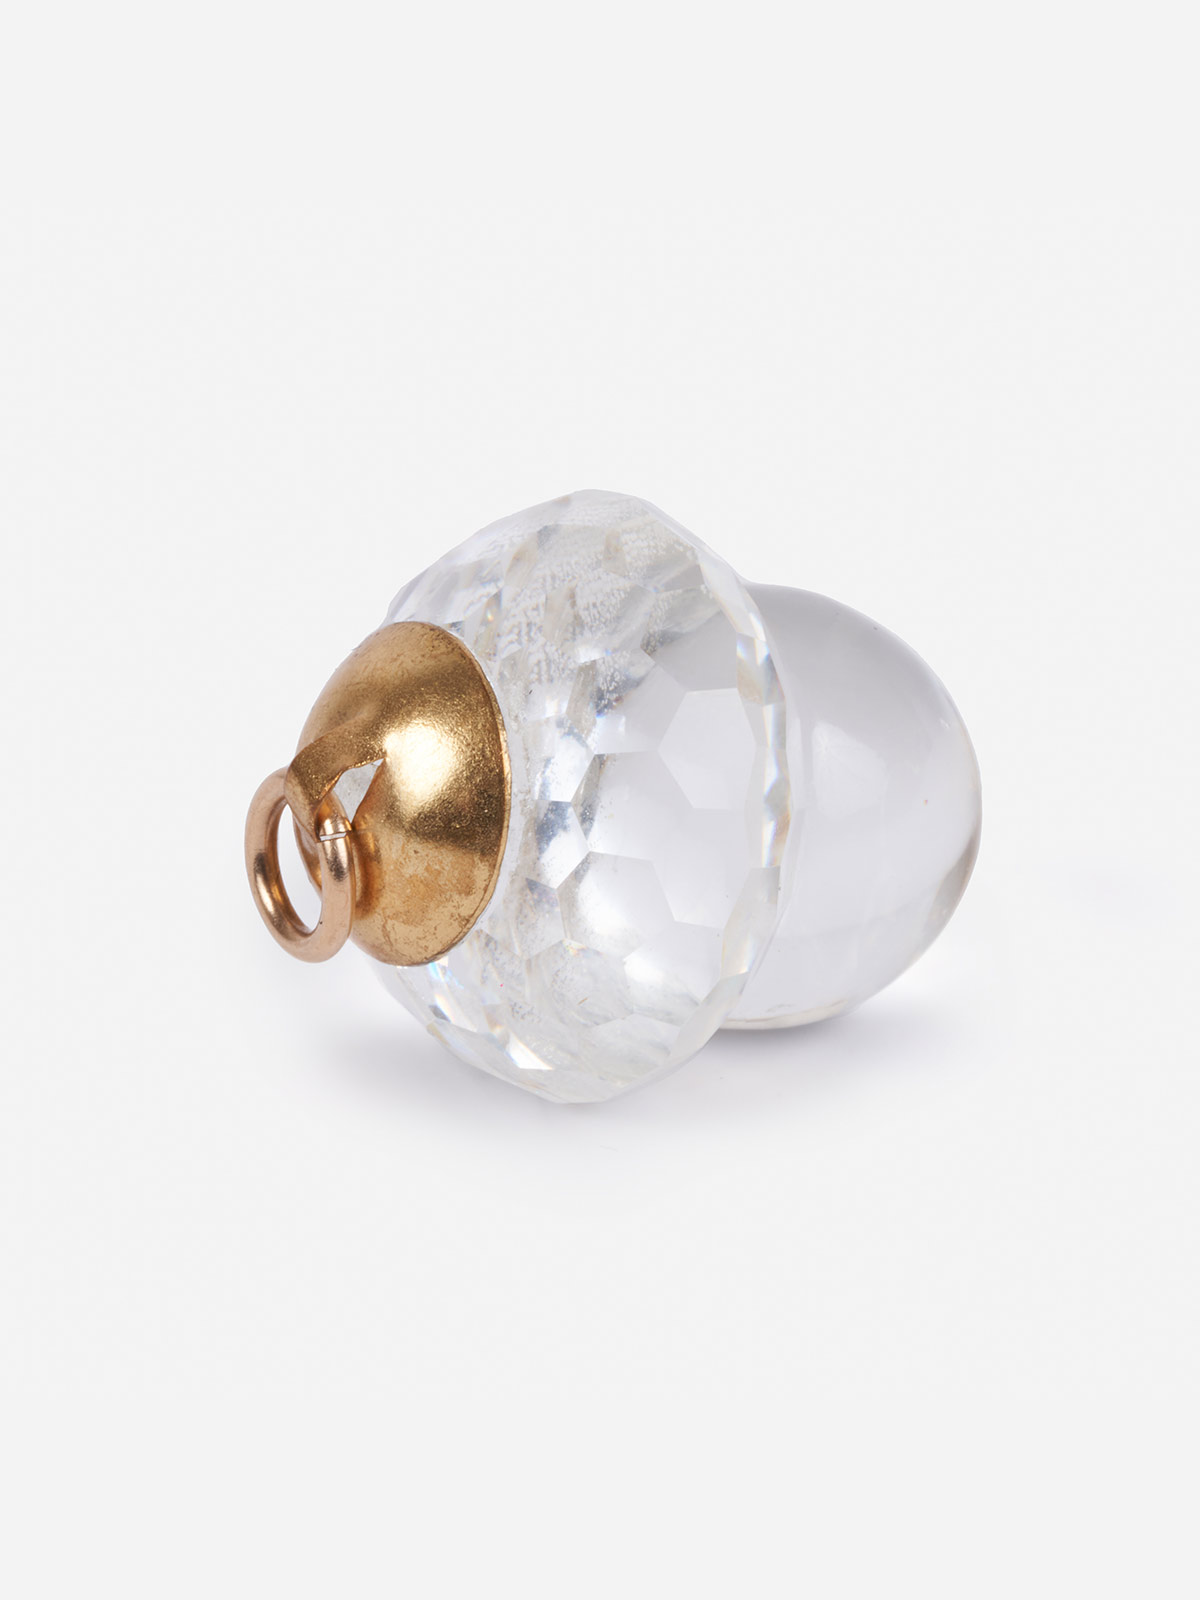 crystal acorn pendant on tray side